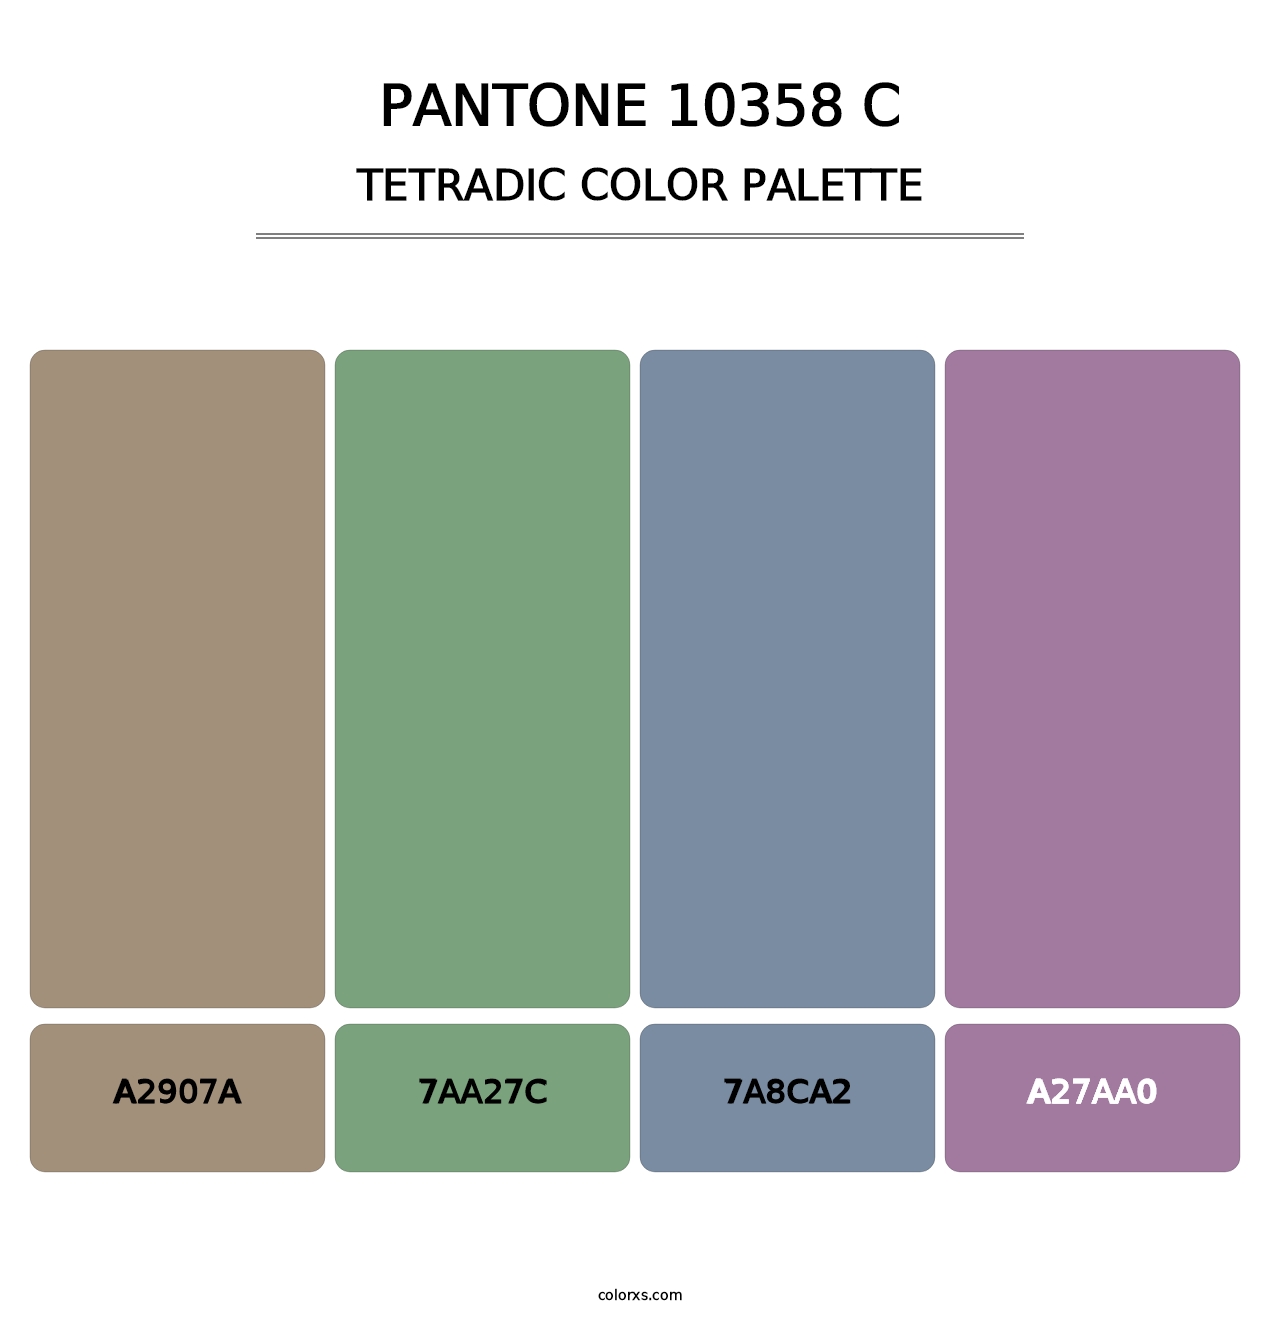 PANTONE 10358 C - Tetradic Color Palette